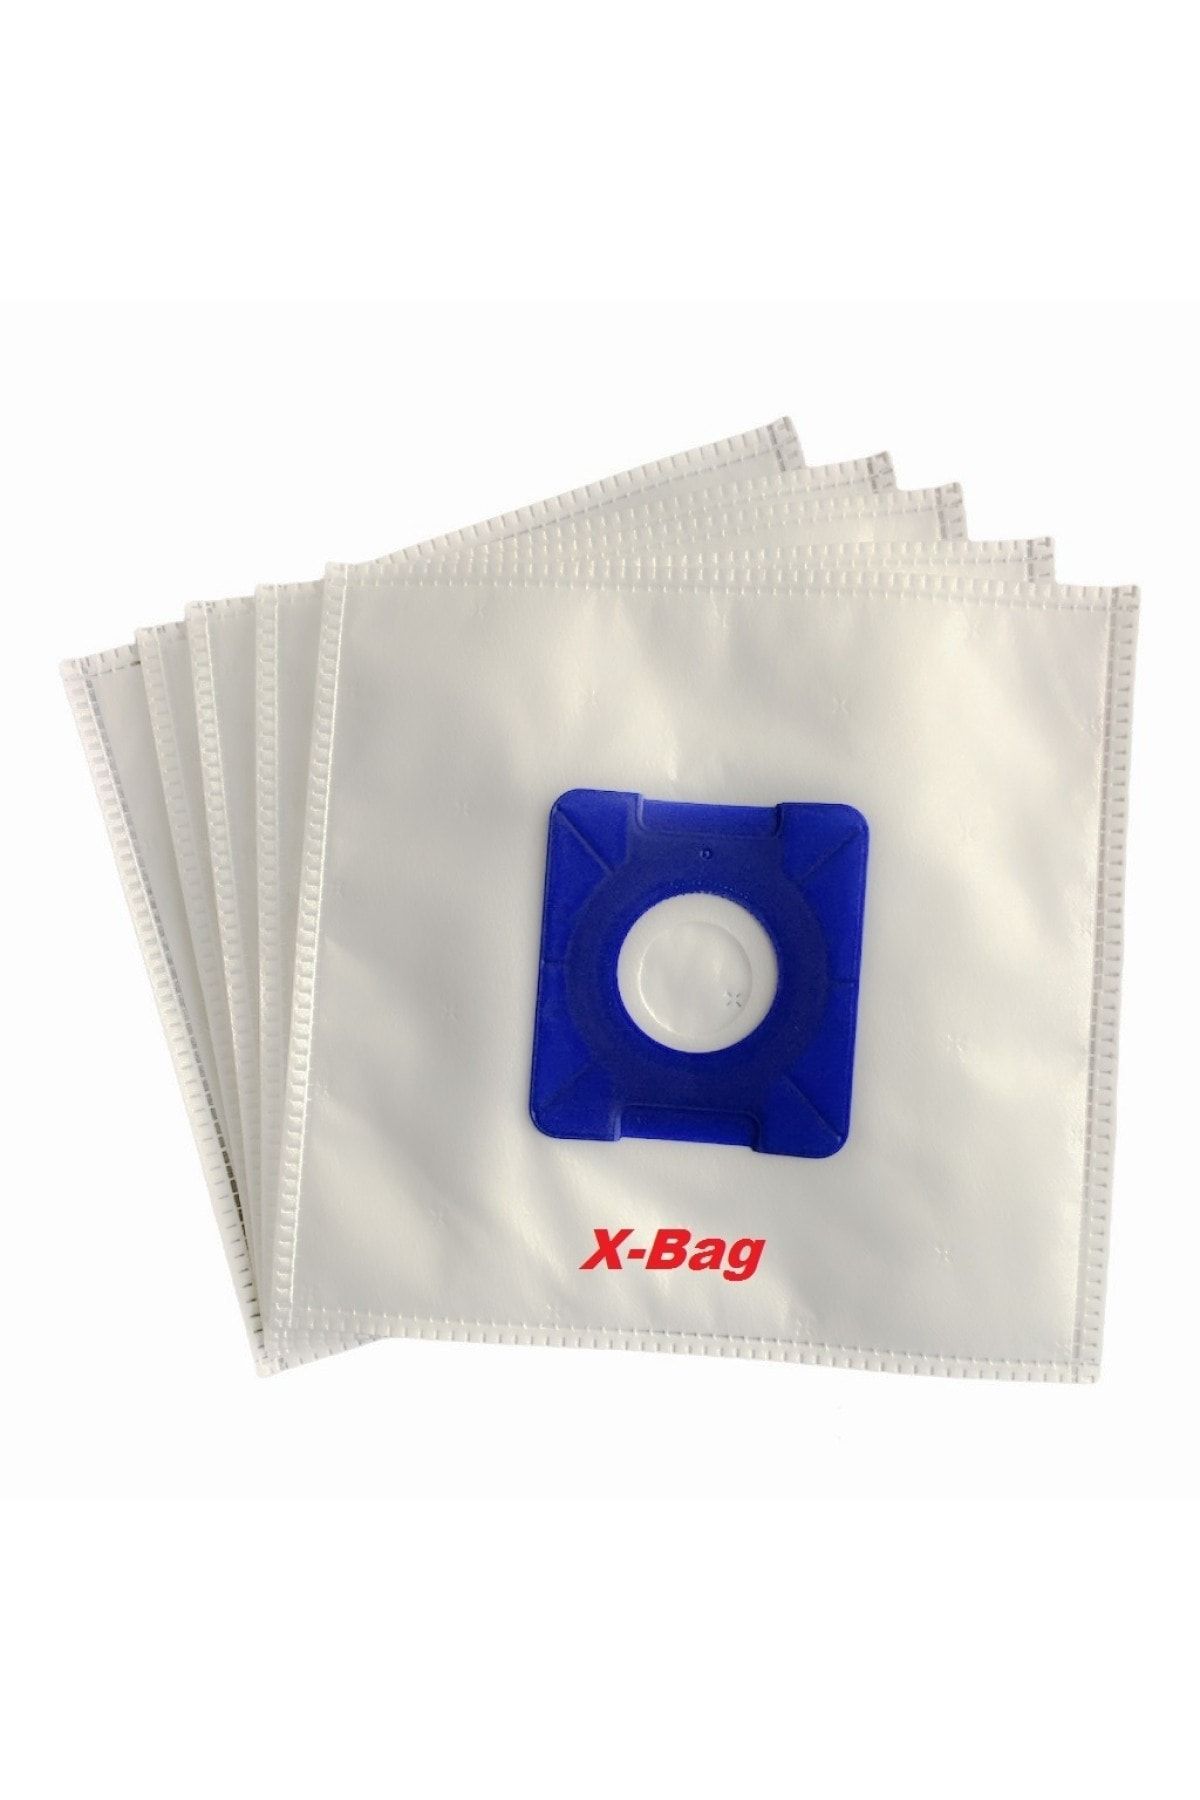 X-Bag Fantom Dc 4300 4 Çeker Süpürge Toz Torbası 15 Adet